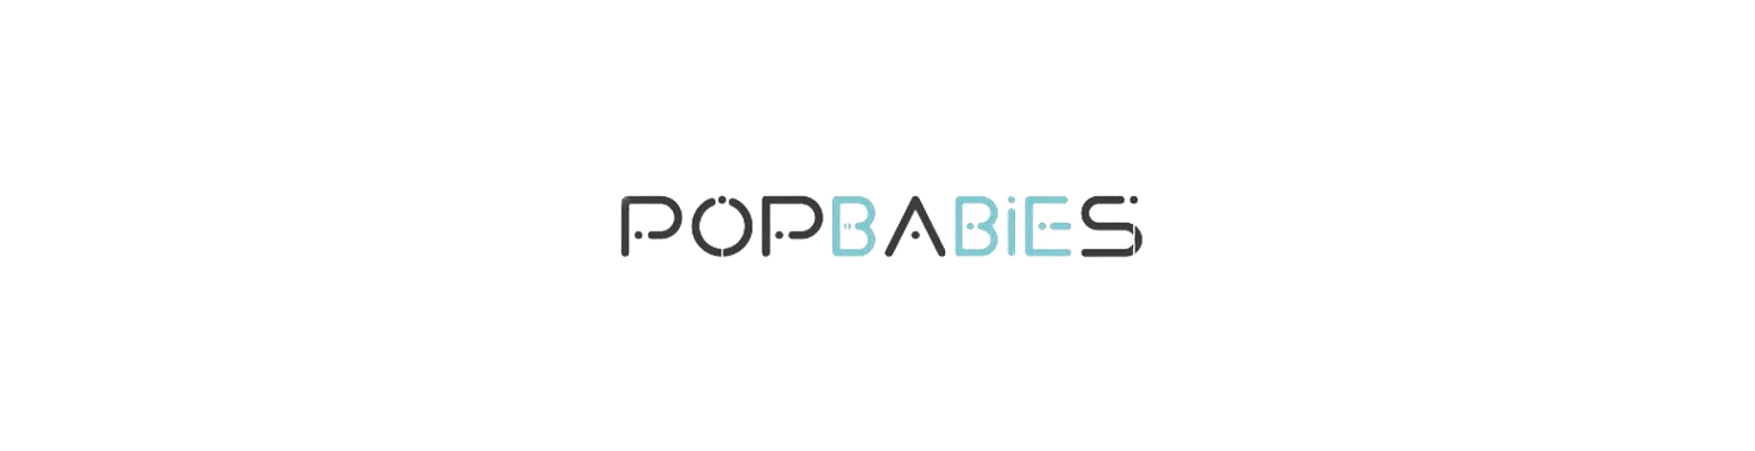 PopBabies